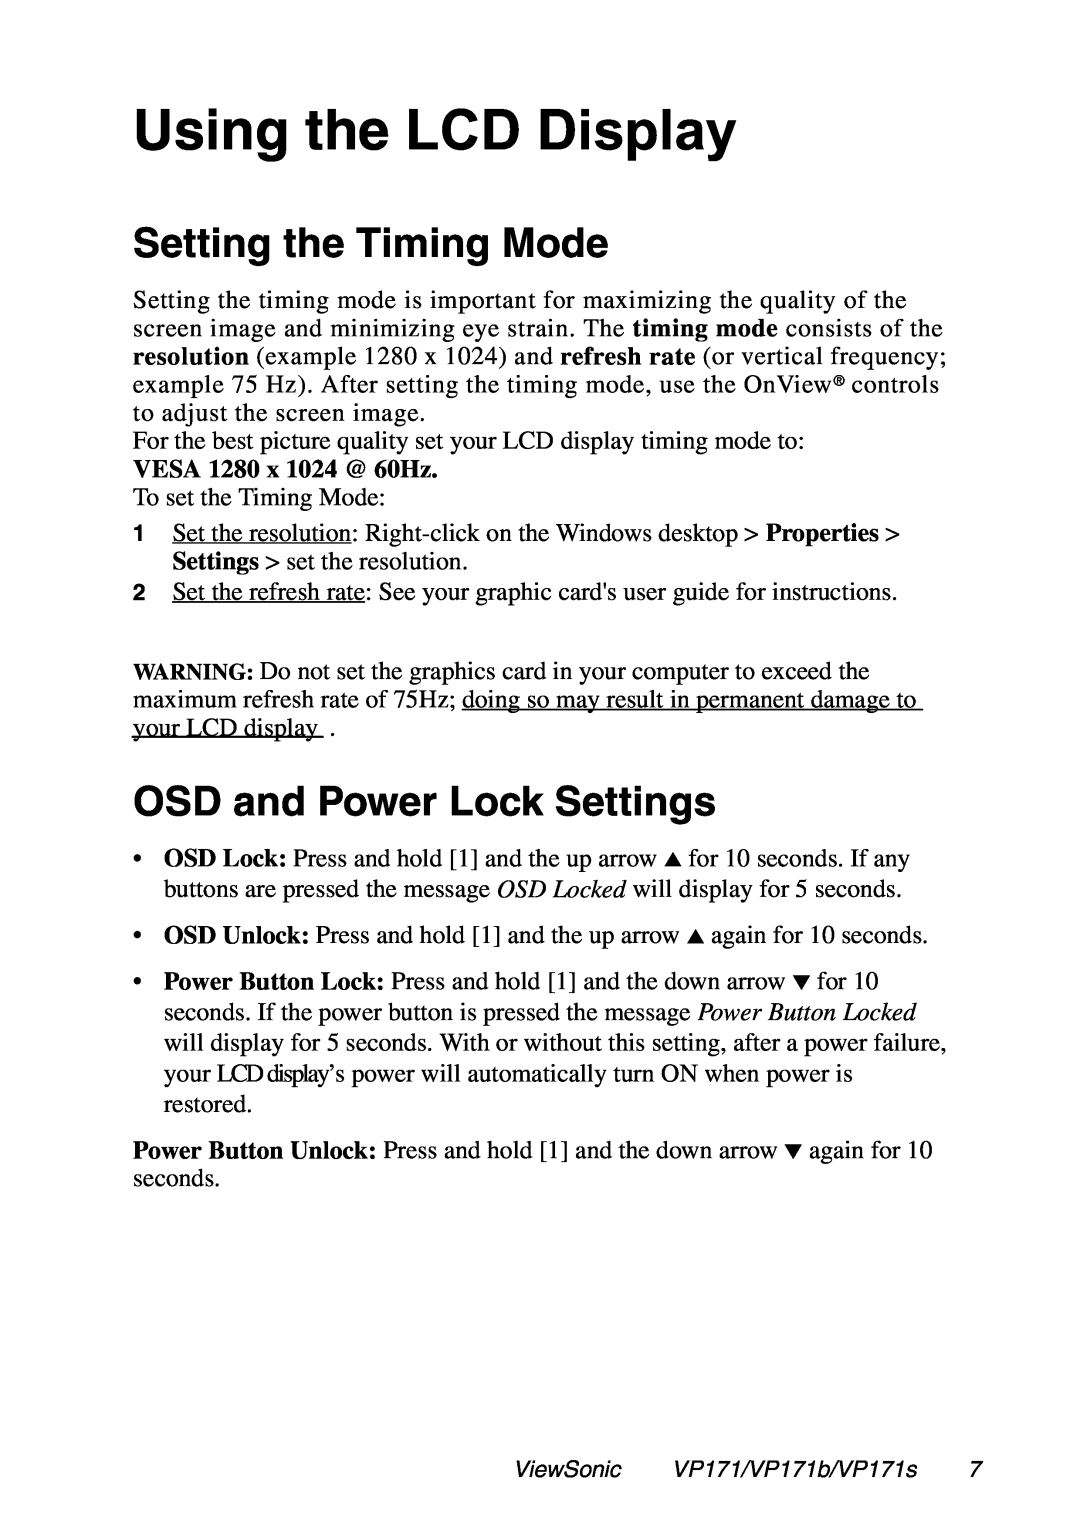 ViewSonic VP171 manual Setting the Timing Mode, OSD and Power Lock Settings, Using the LCD Display, VESA 1280 x 1024 @ 60Hz 